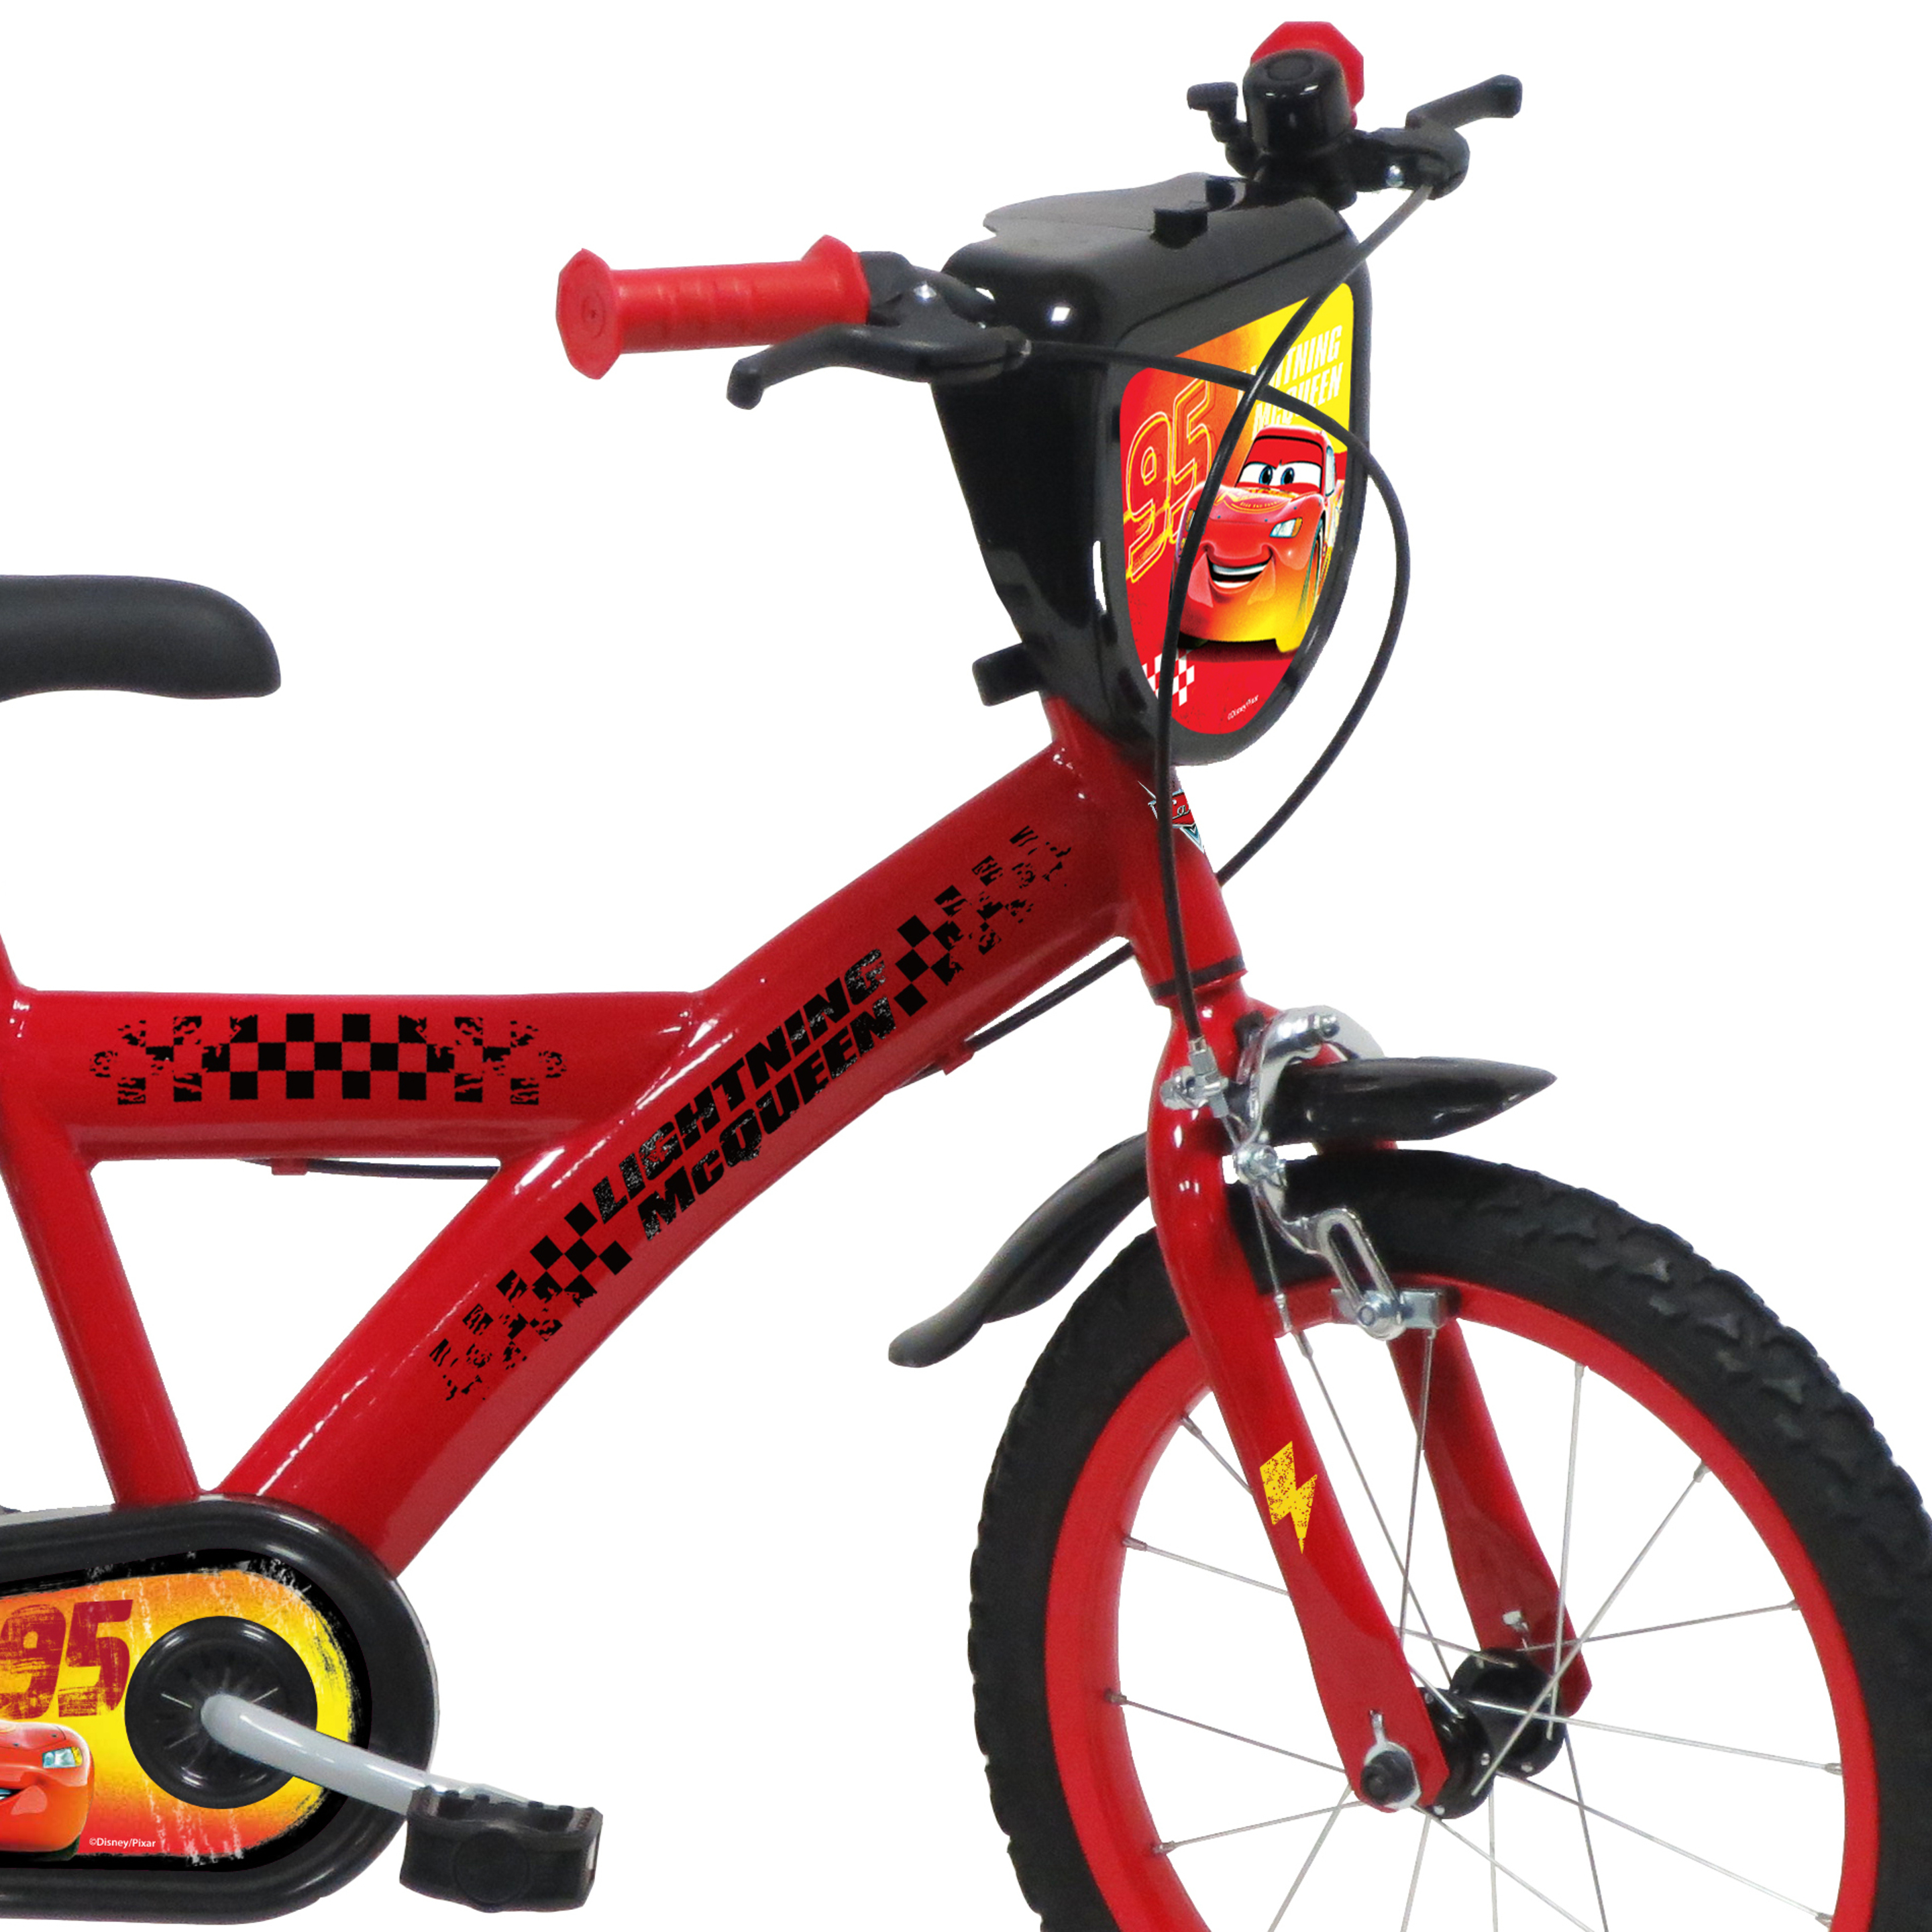 Bicicleta Niño 16 Pulgadas Cars 5-7 Años - Rojo  MKP